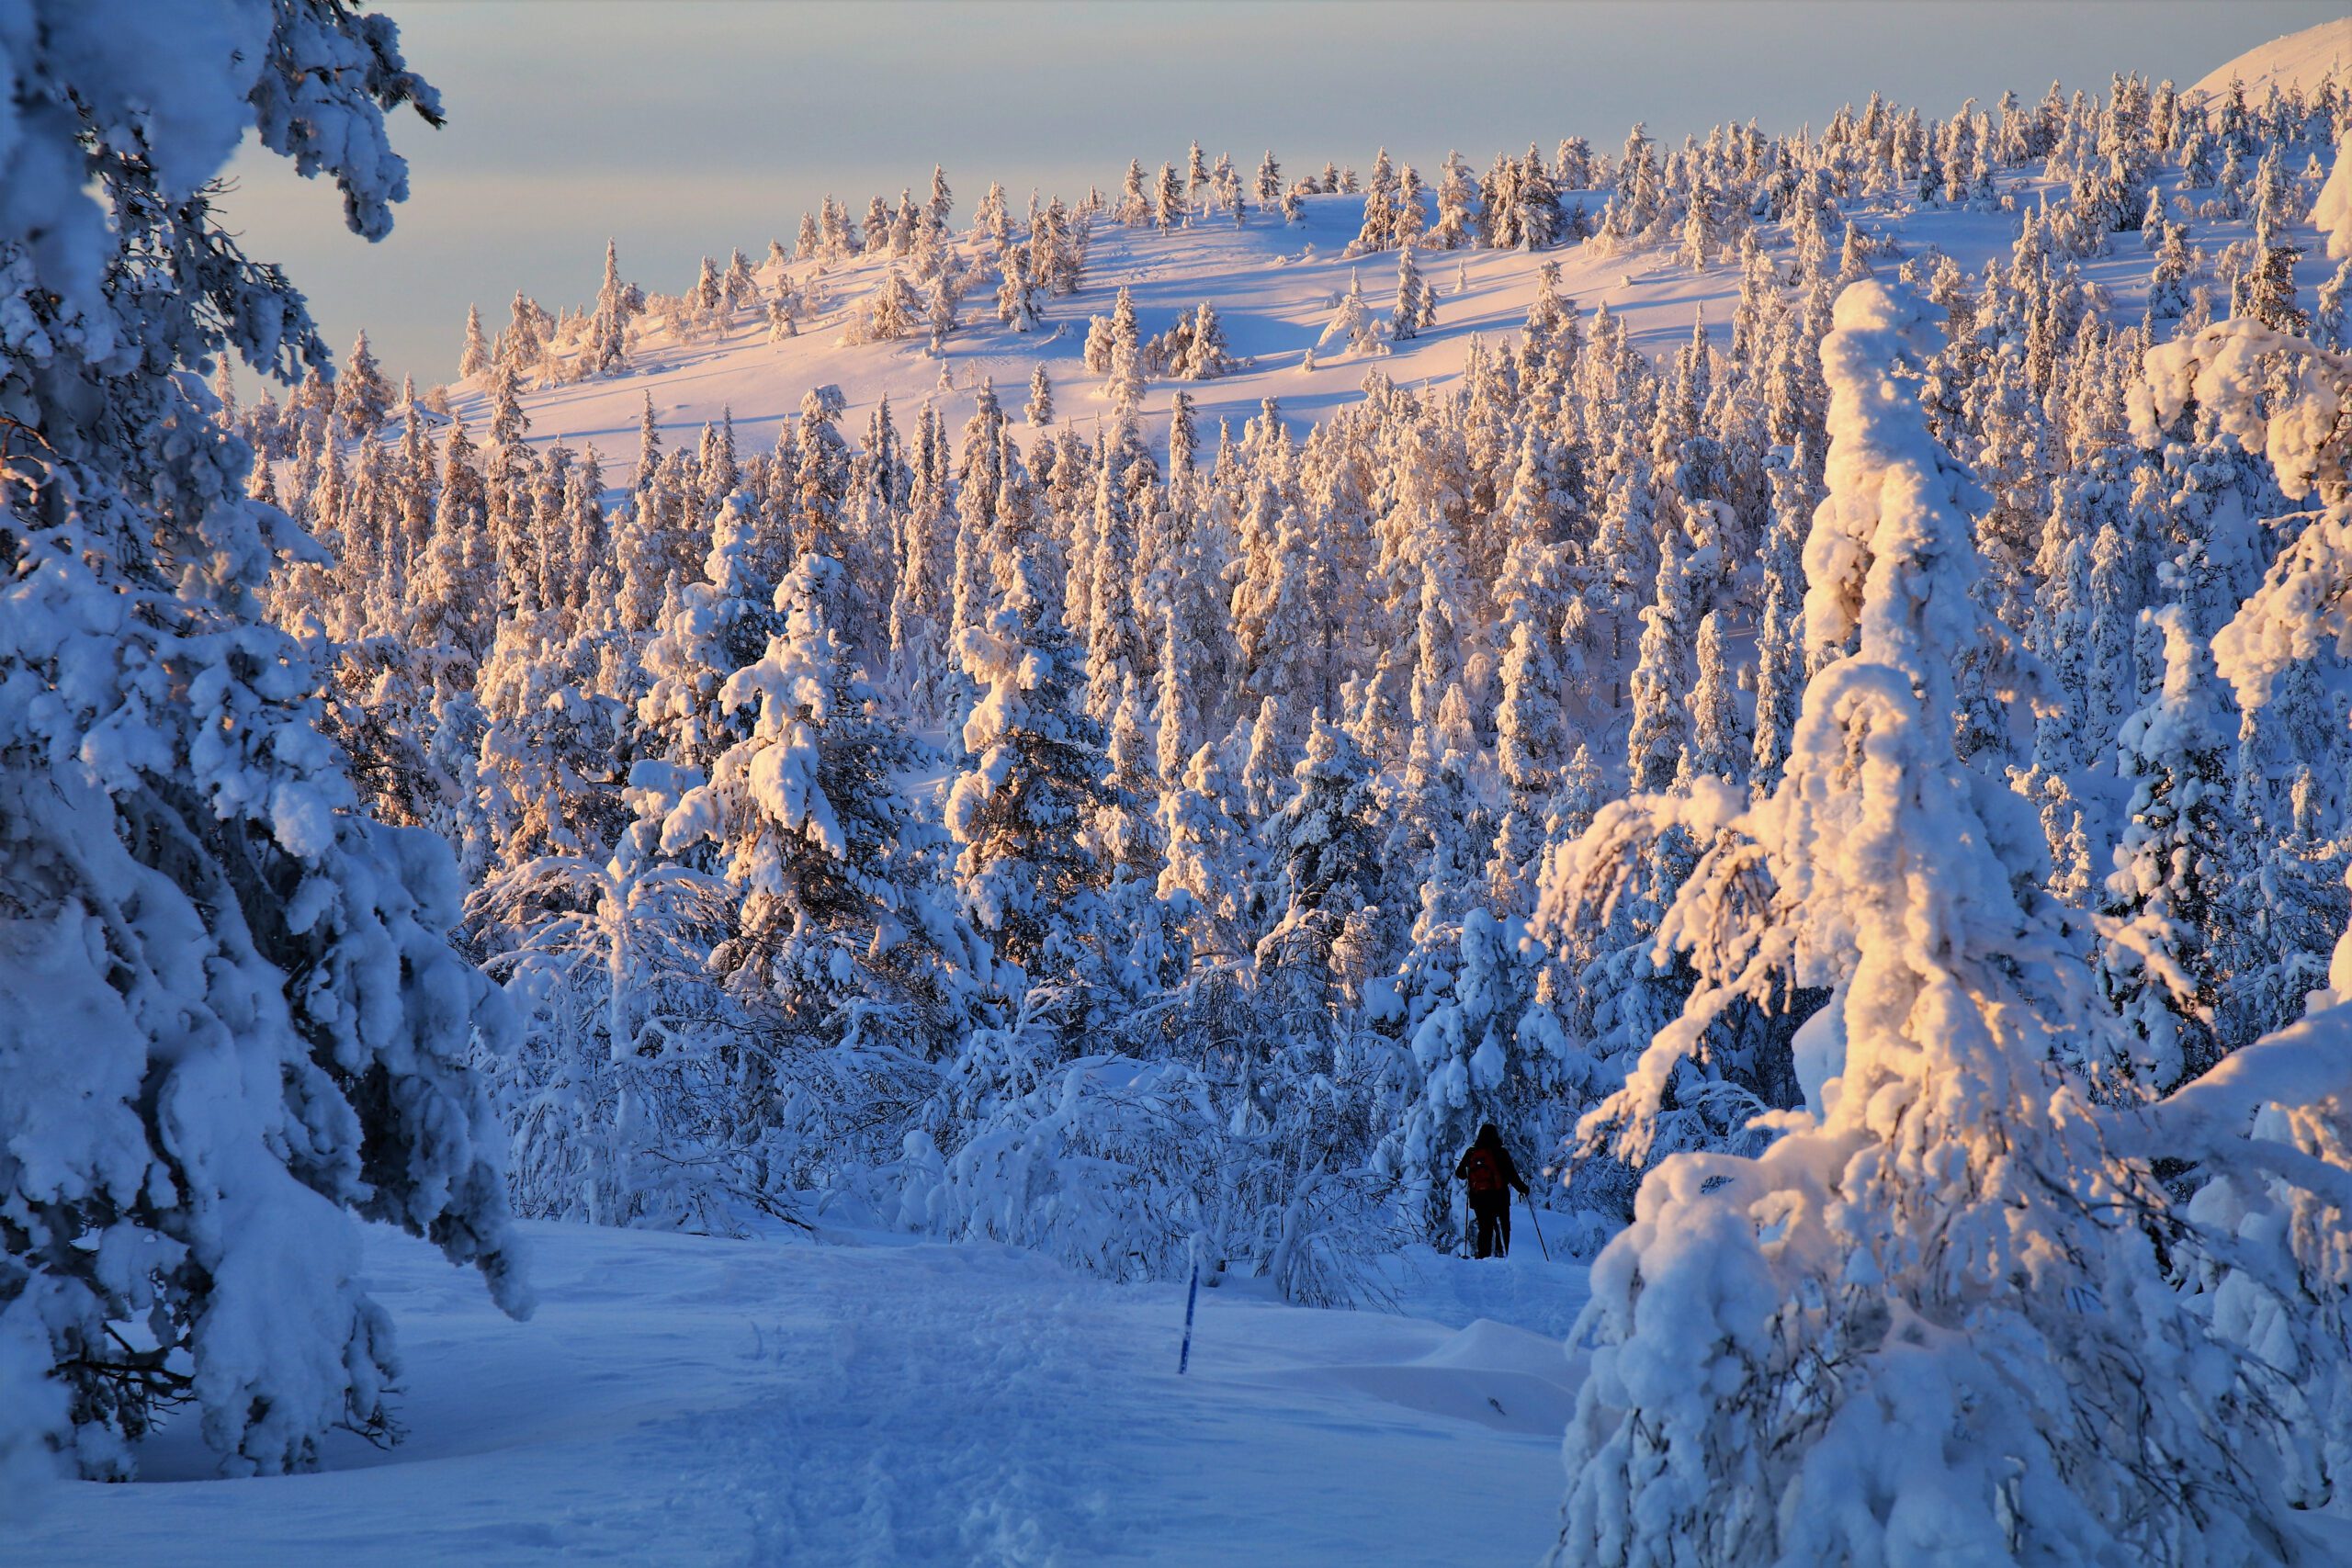 Pyhä-Luosto National Park - Finland - Lapland - Christoffel Travel